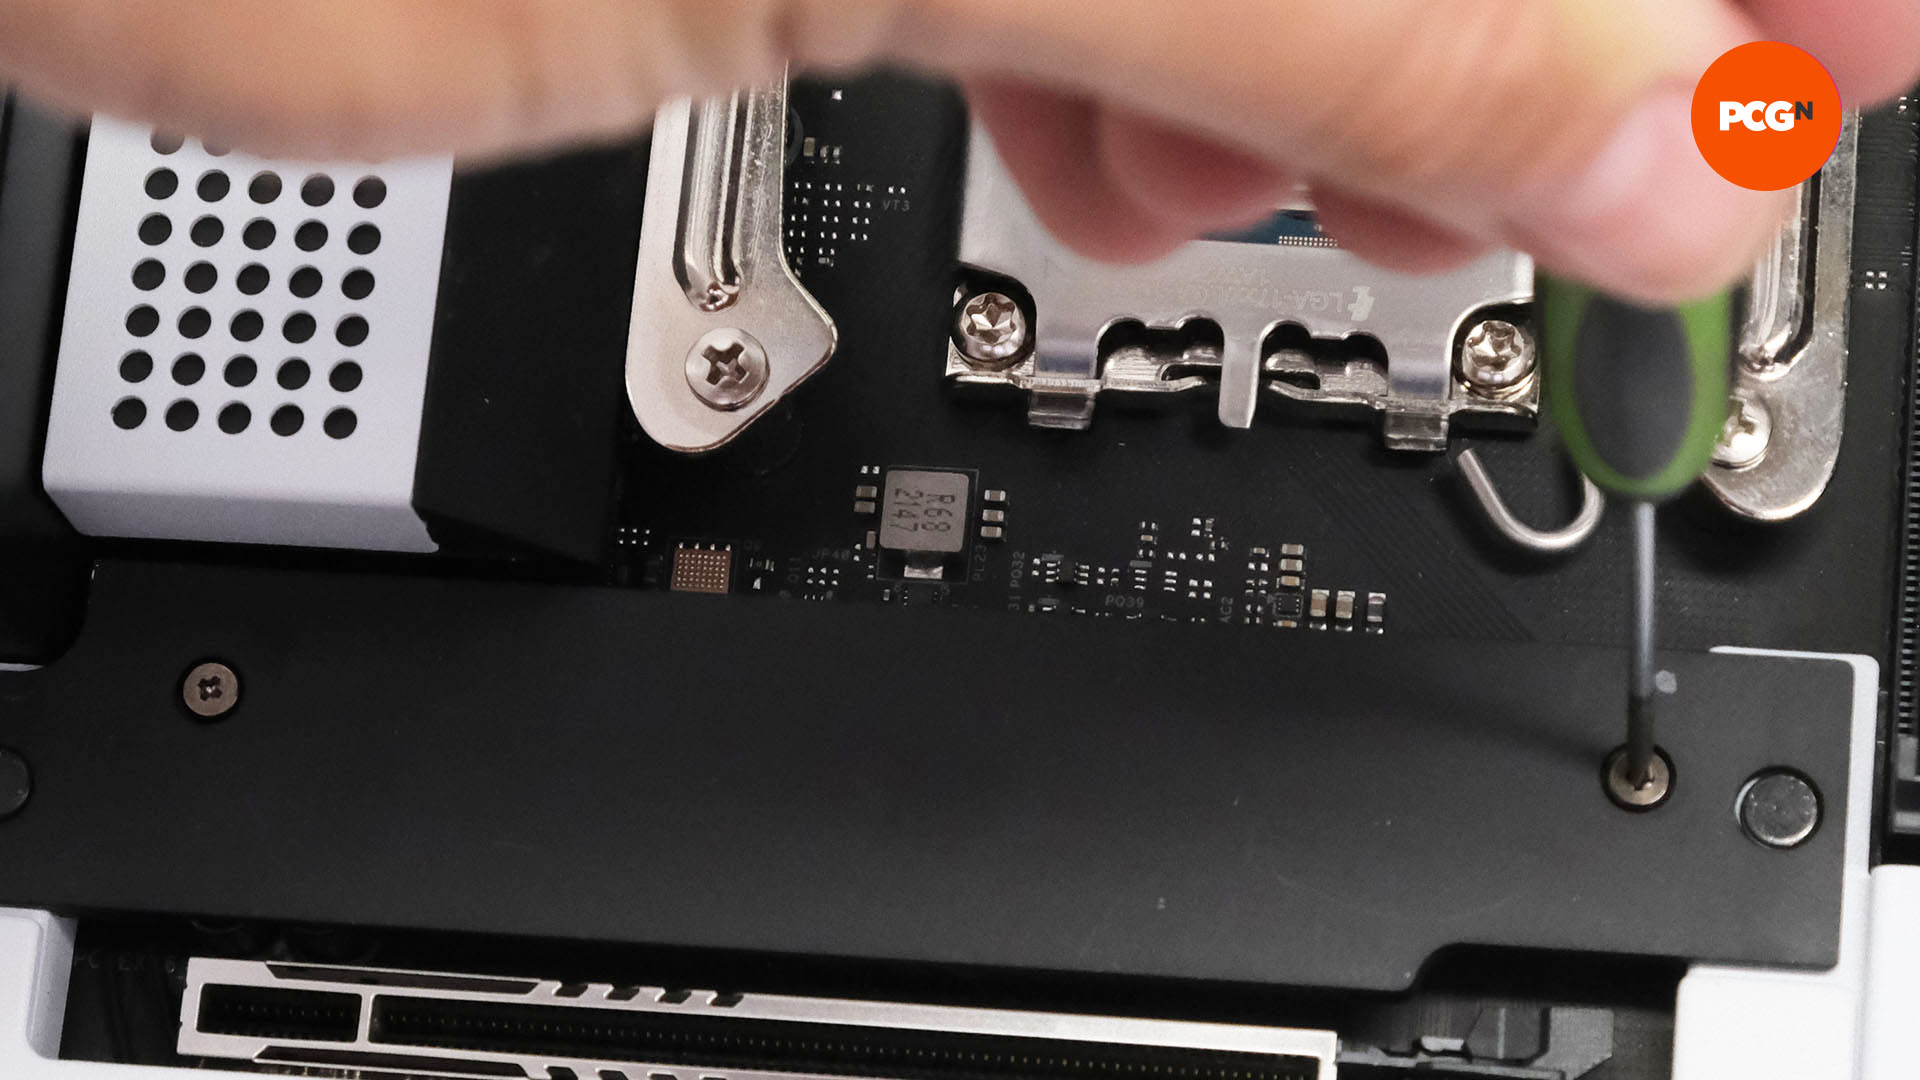 How to install an M.2 SSD: Screw motherboard heatsink